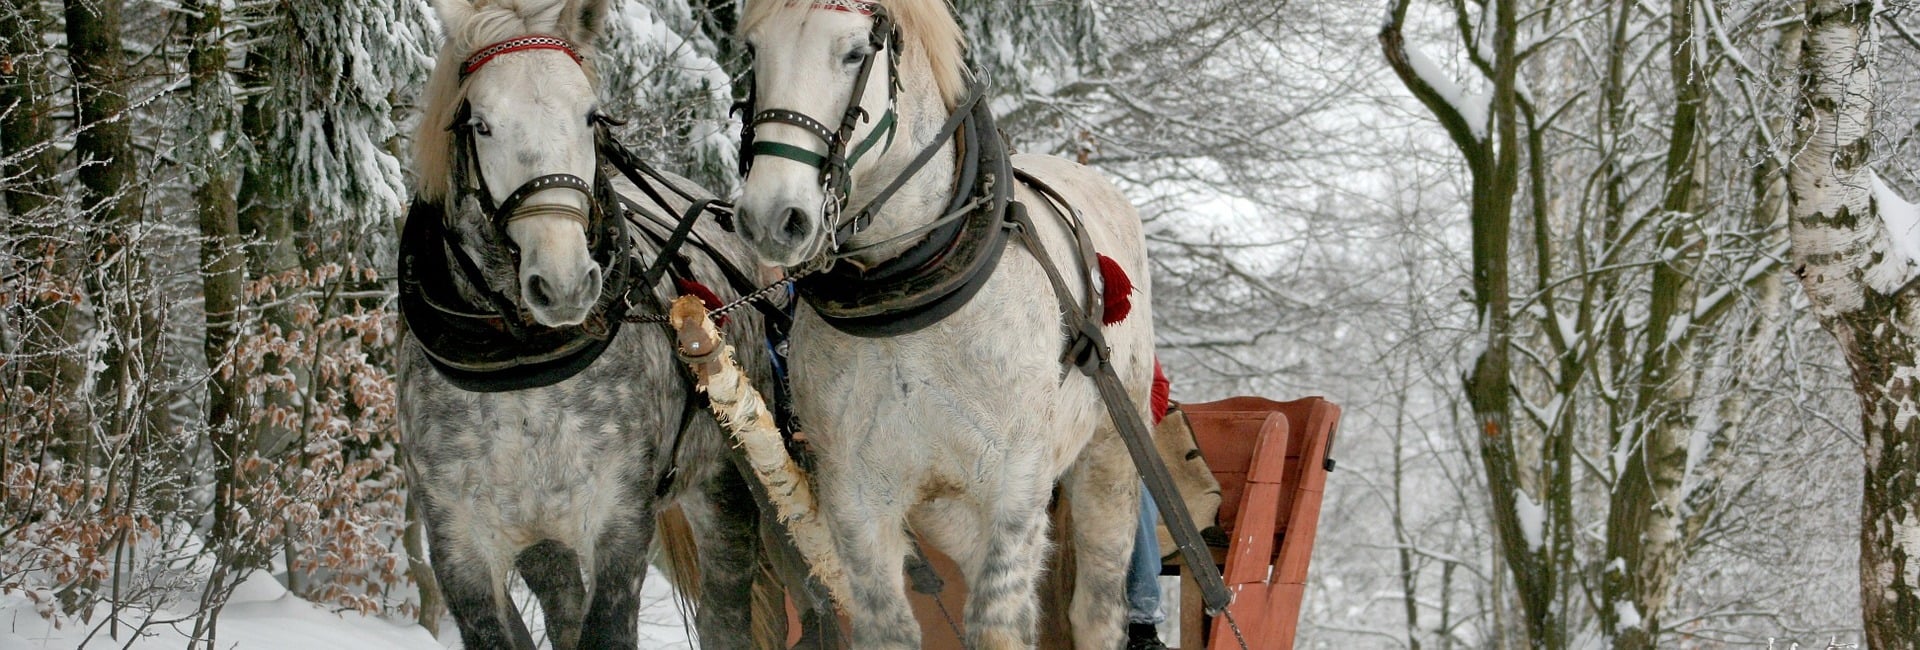 Horse drawn carriage ride through Grossarl